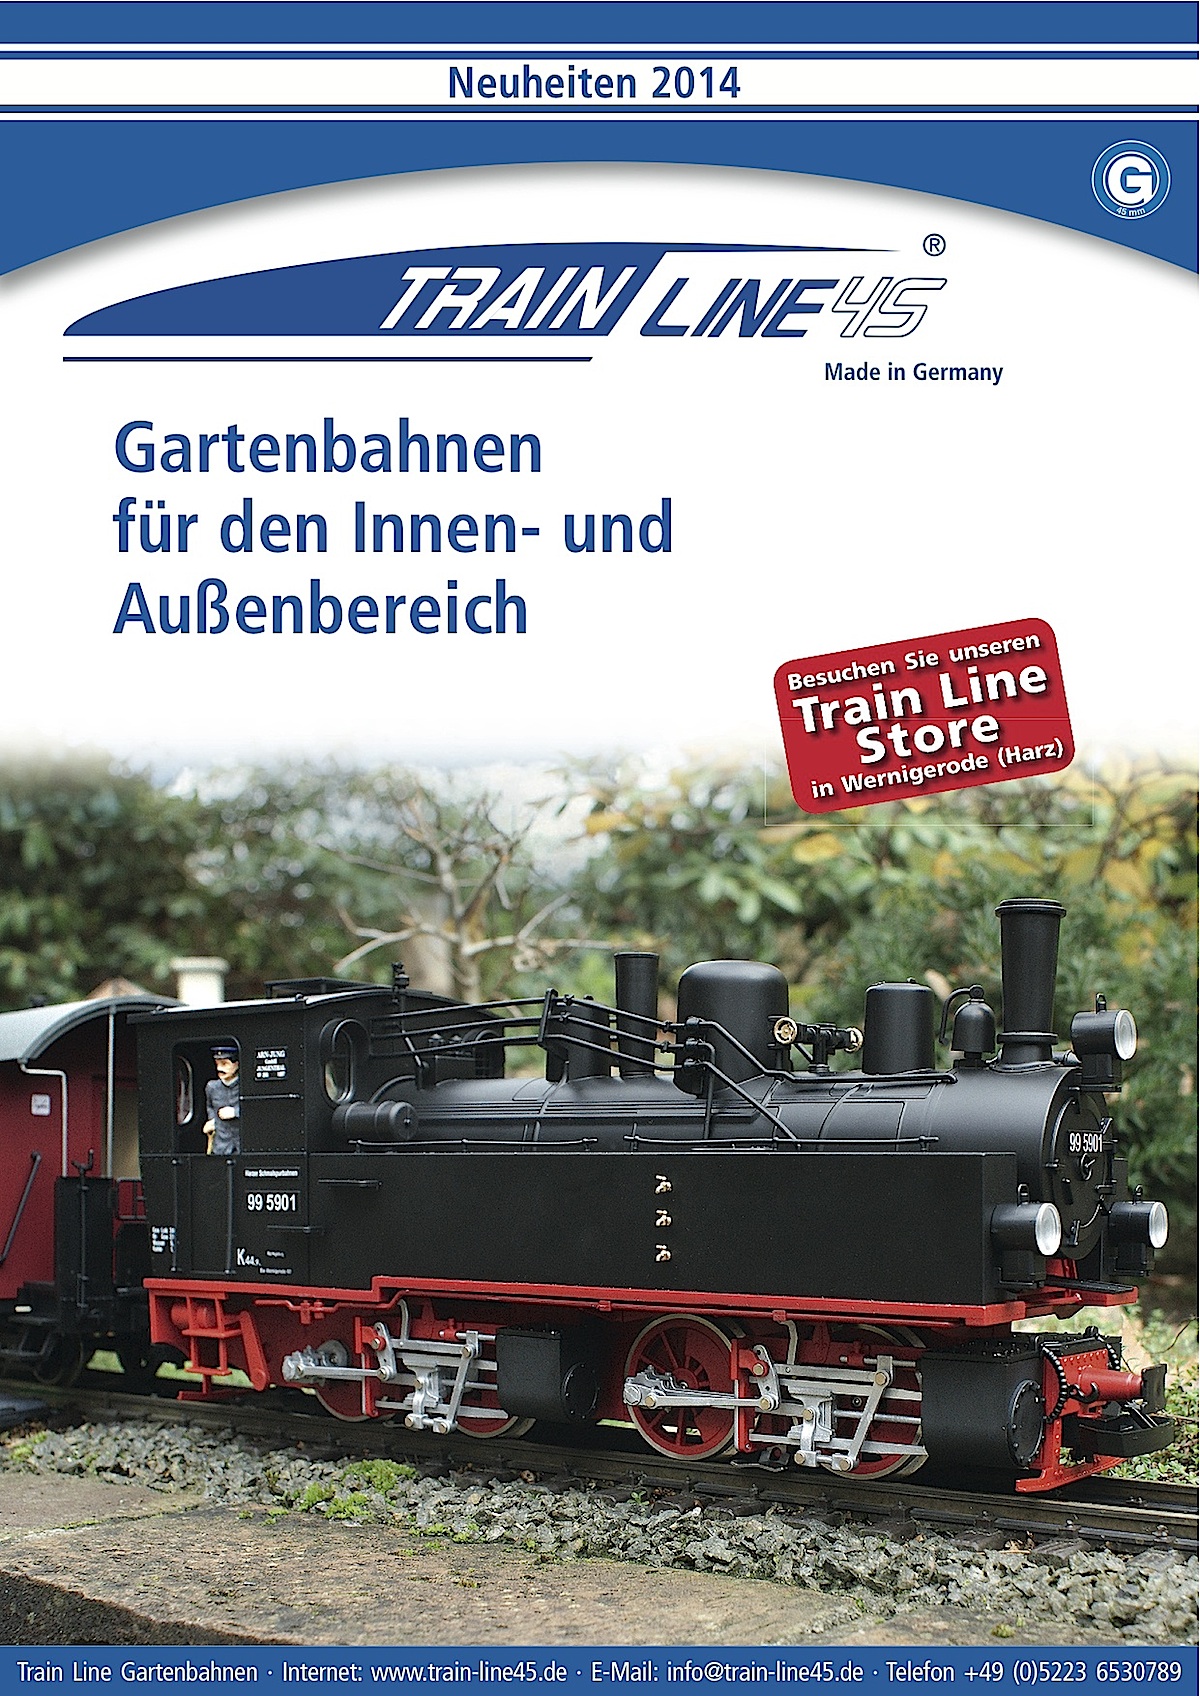 Train Line Neuheiten (New Items) 2014